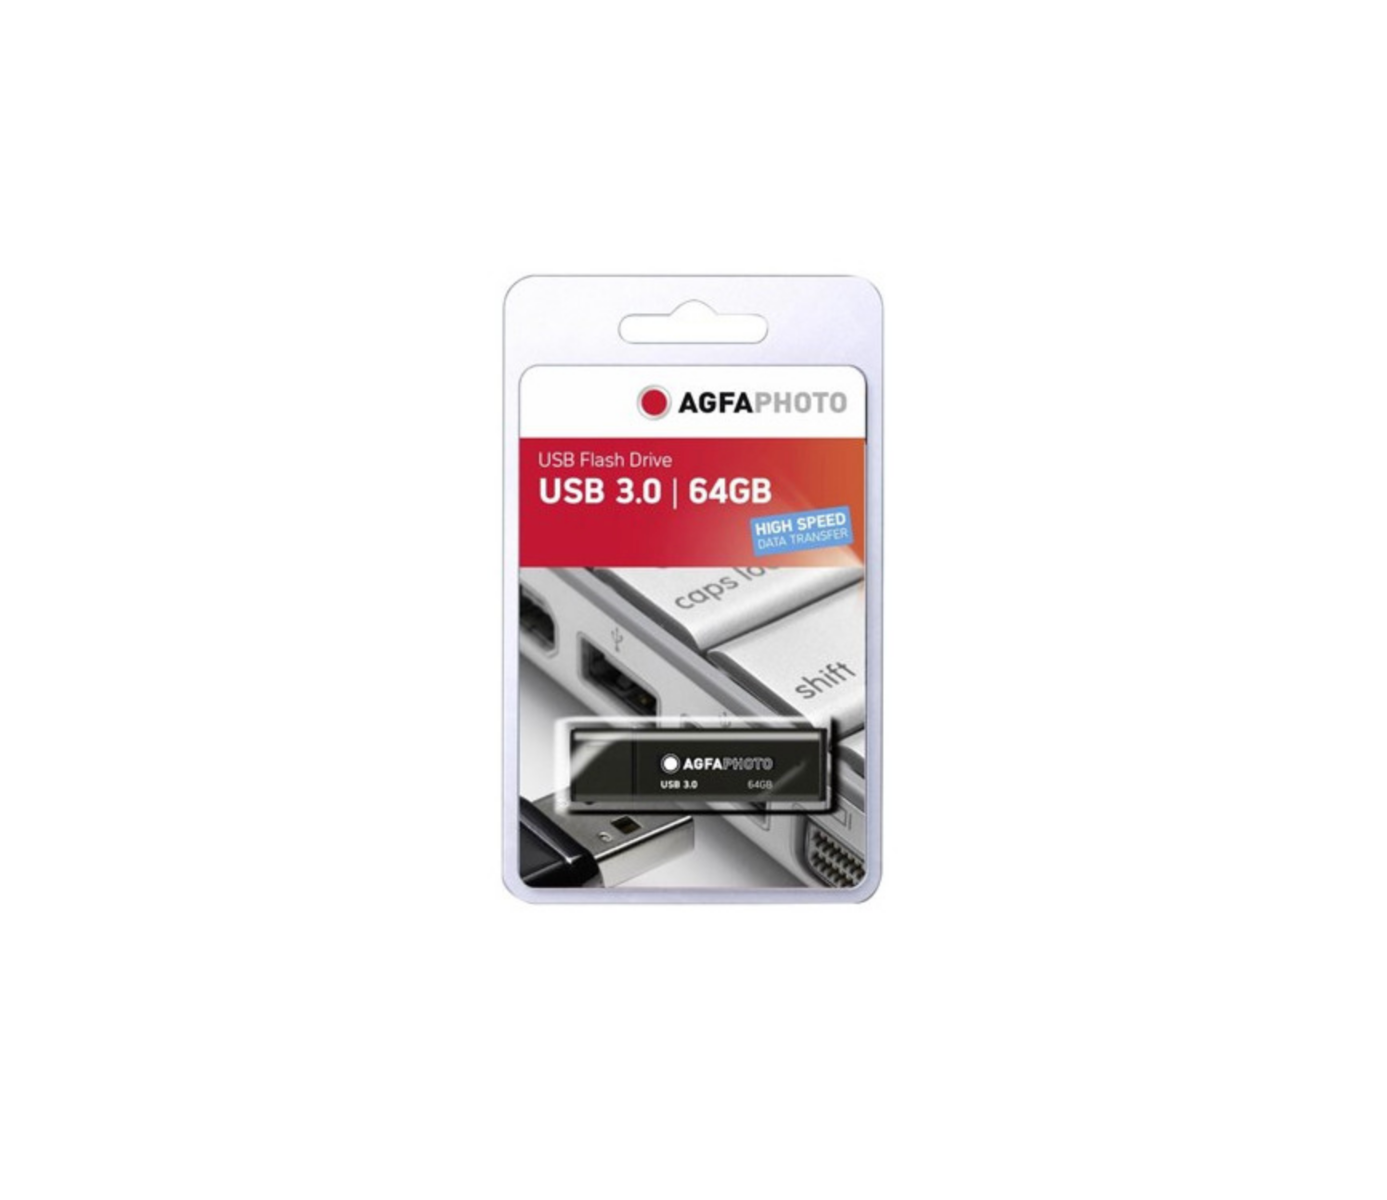 Product Image of AgfaPhoto 64gb USB Stick USB 3.0 flash drive - black